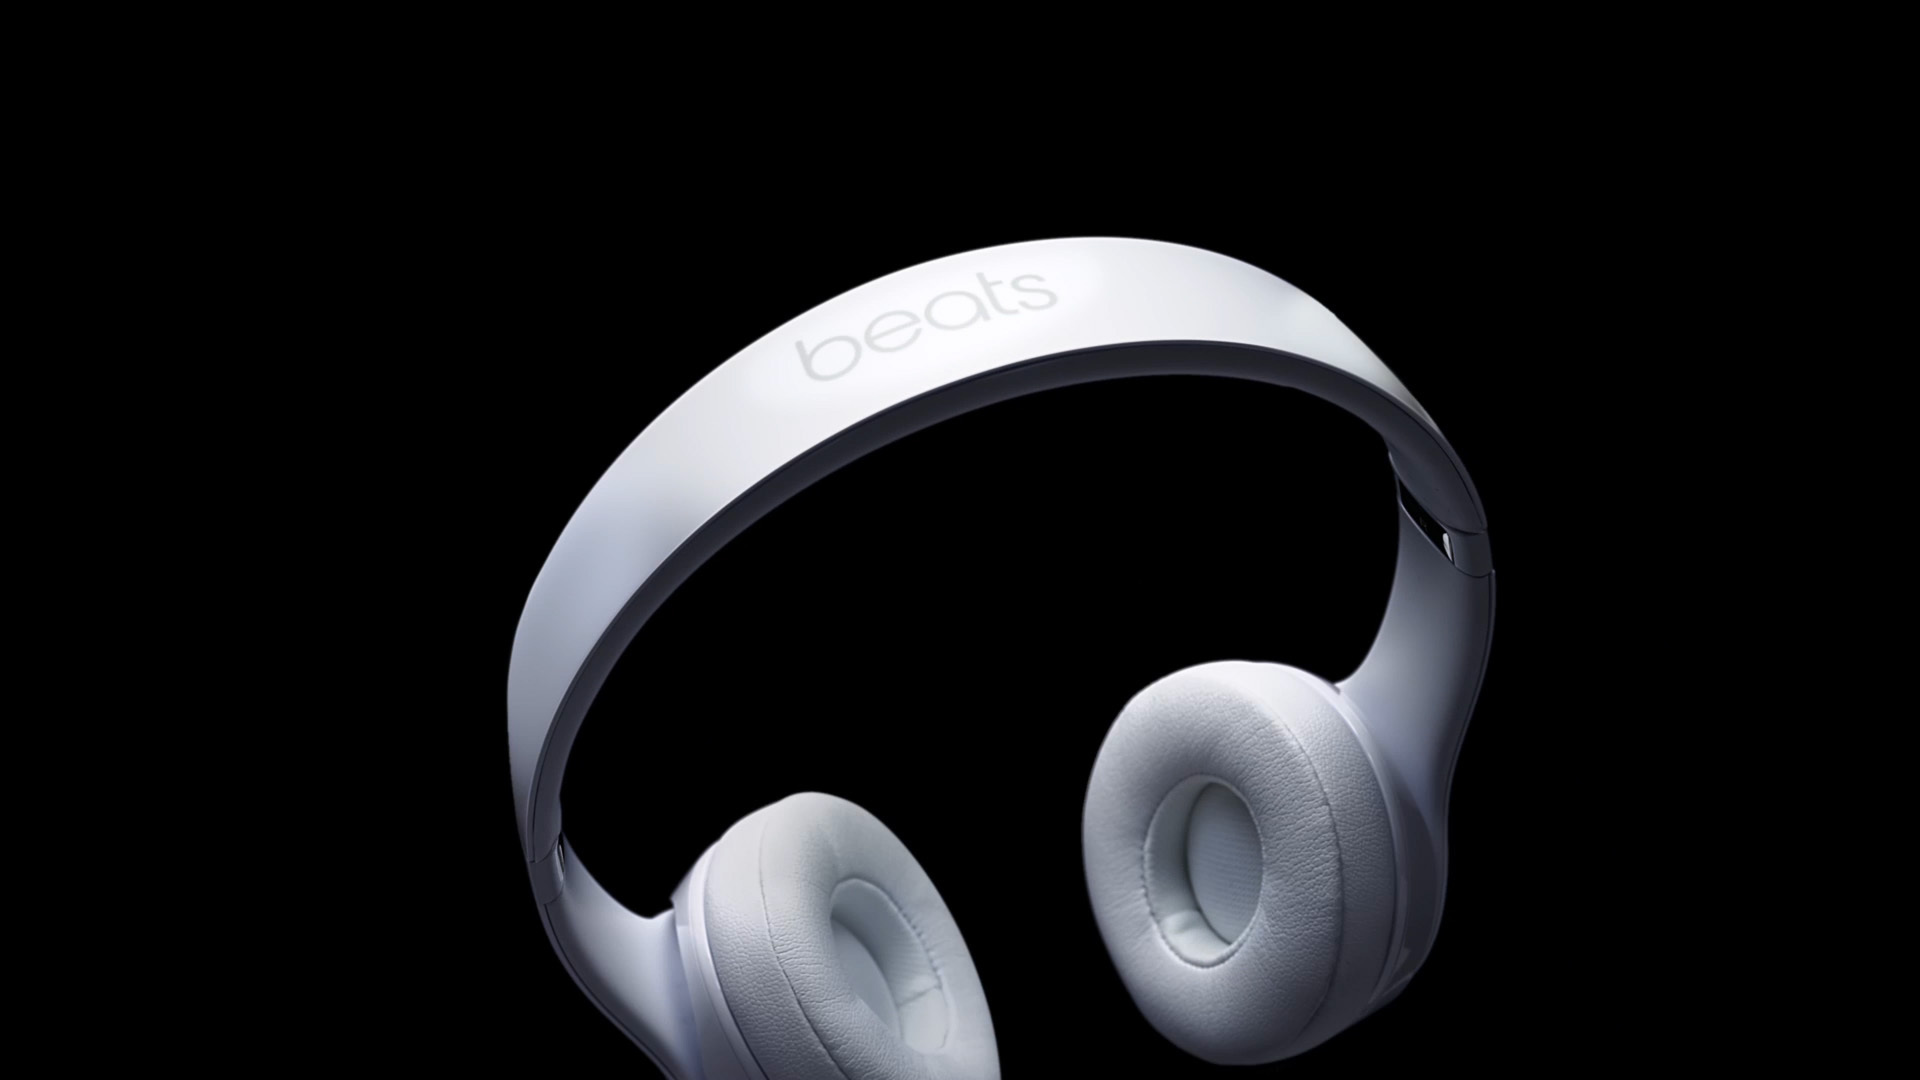 Solo³ Wireless - Everyday On-Ear Headphones - Beats